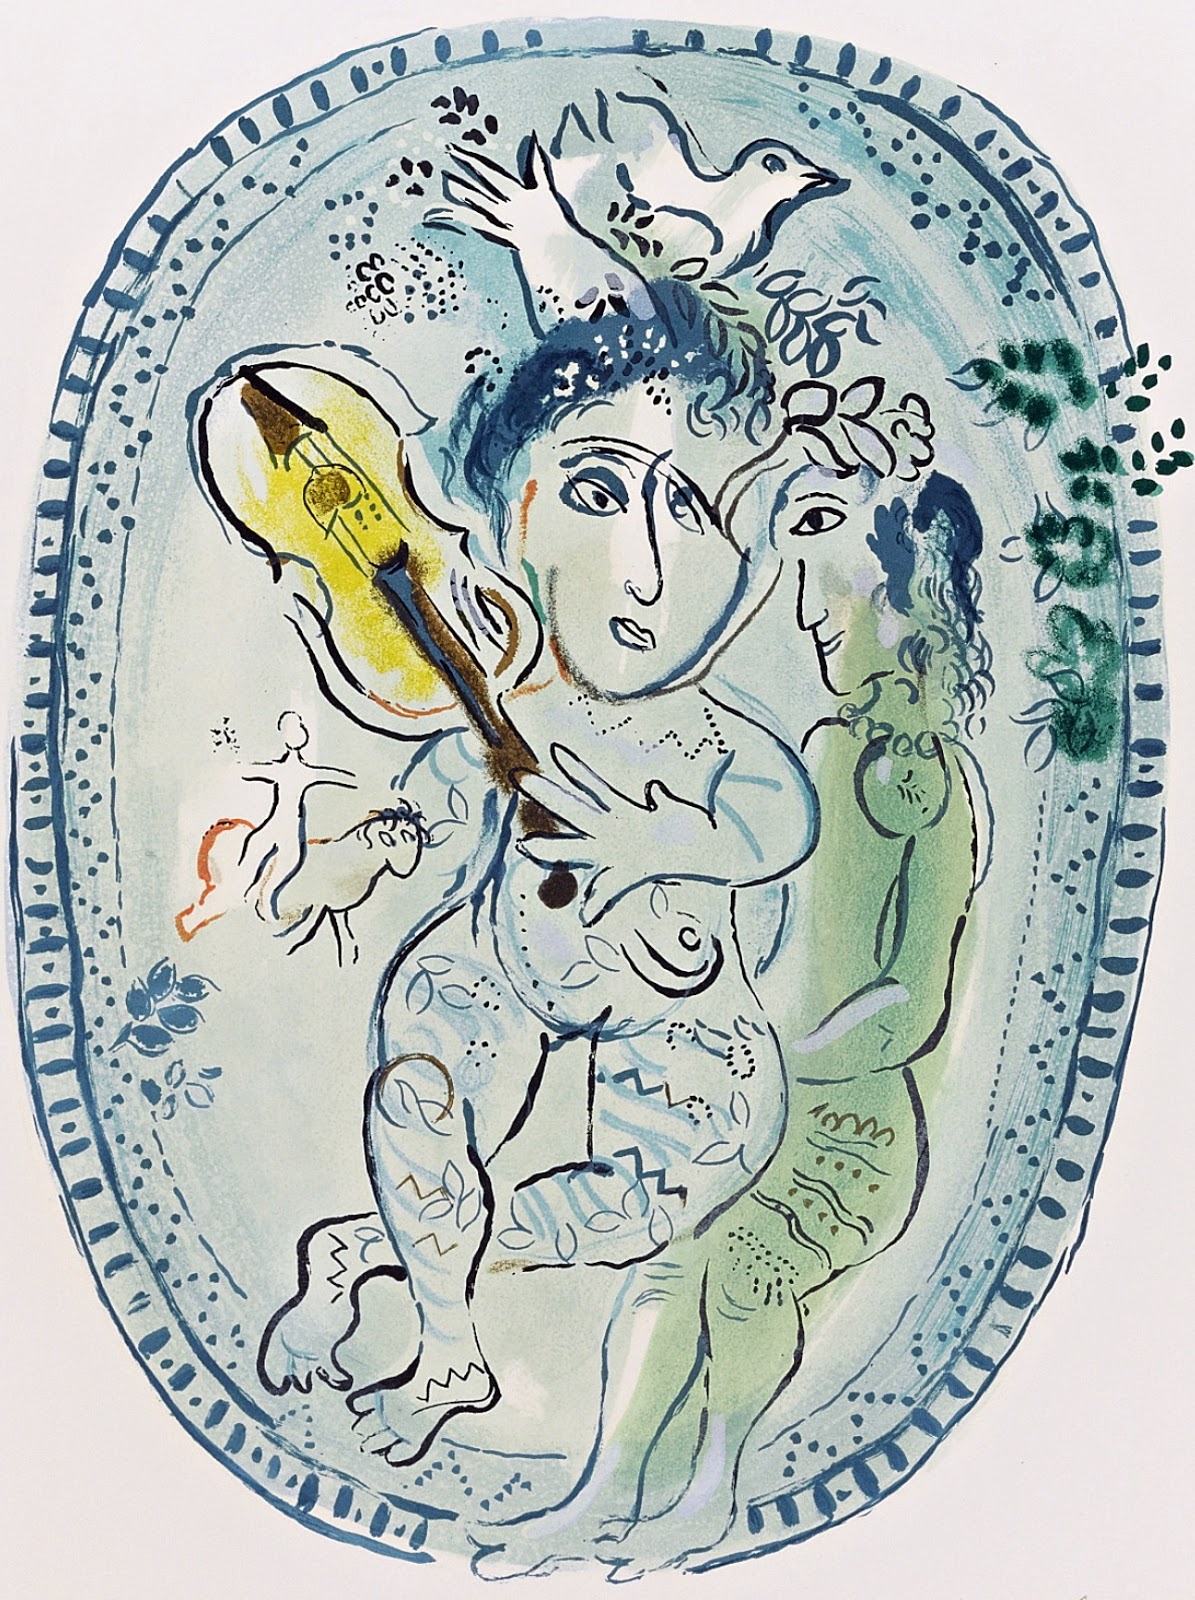 Marc+Chagall-1887-1985 (302).jpg